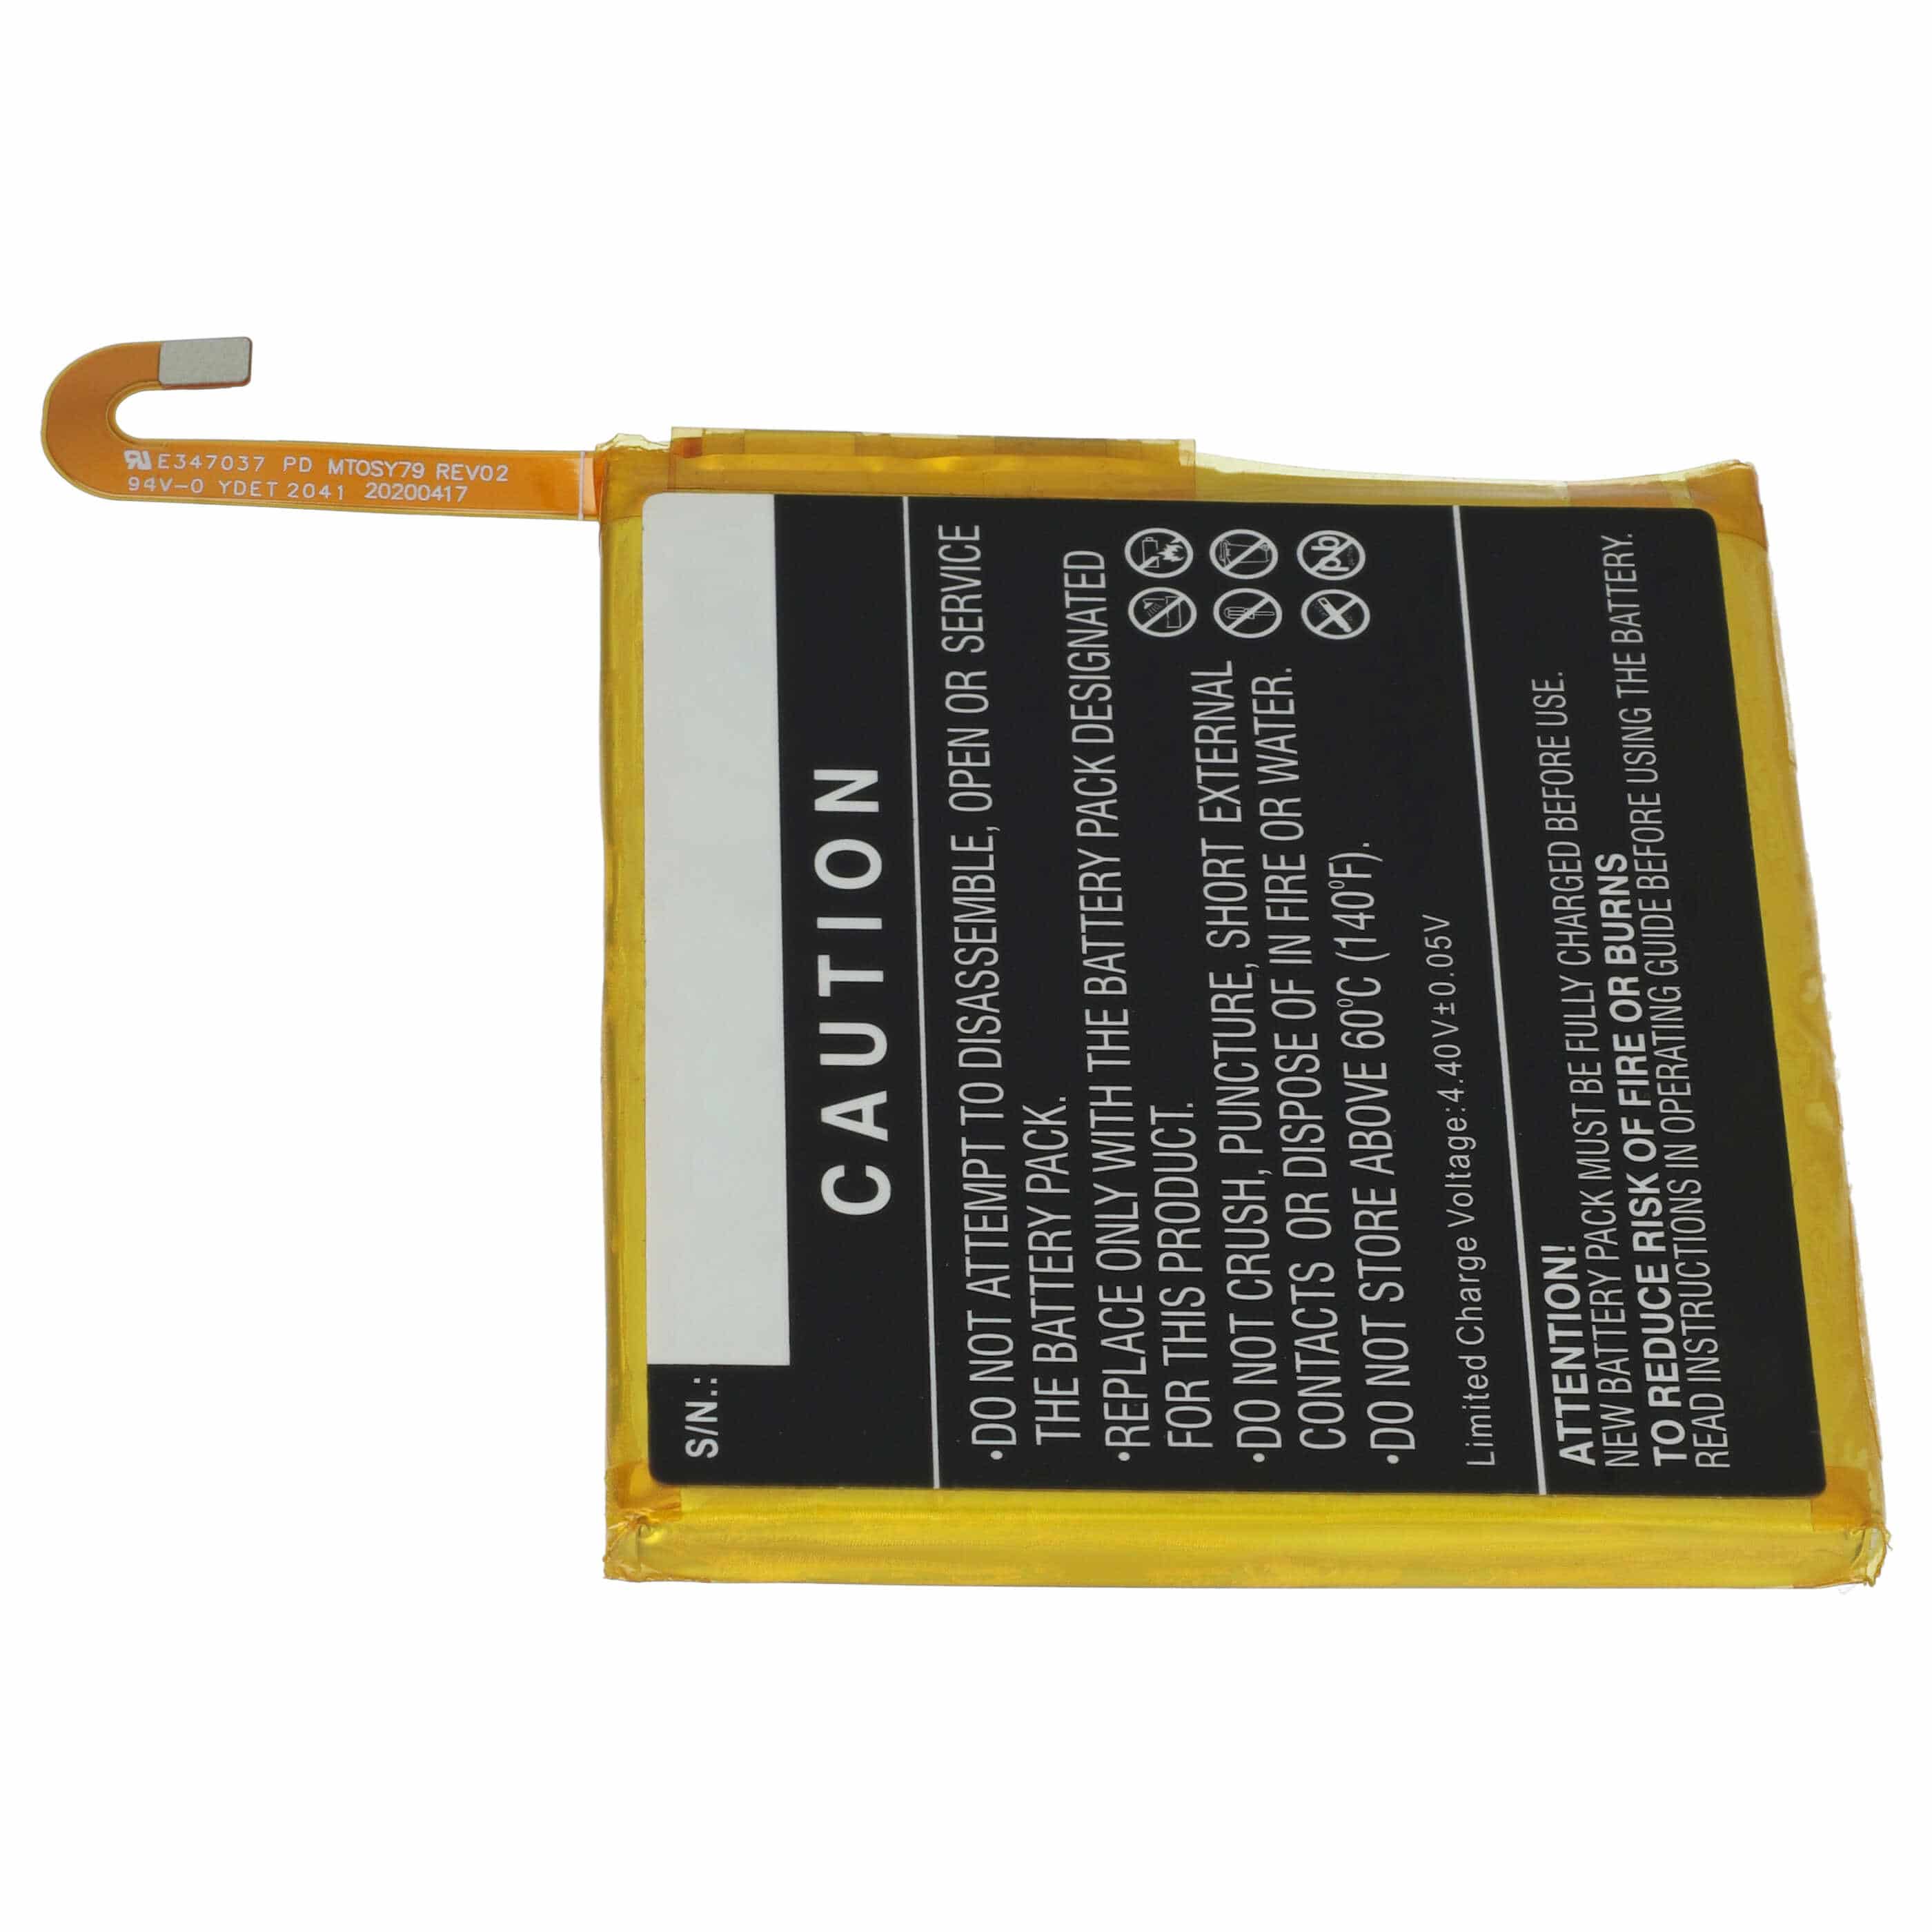 Mobile Phone Battery Replacement for Motorola LZ50, SB18C74374 - 4850mAh 3.85V Li-polymer